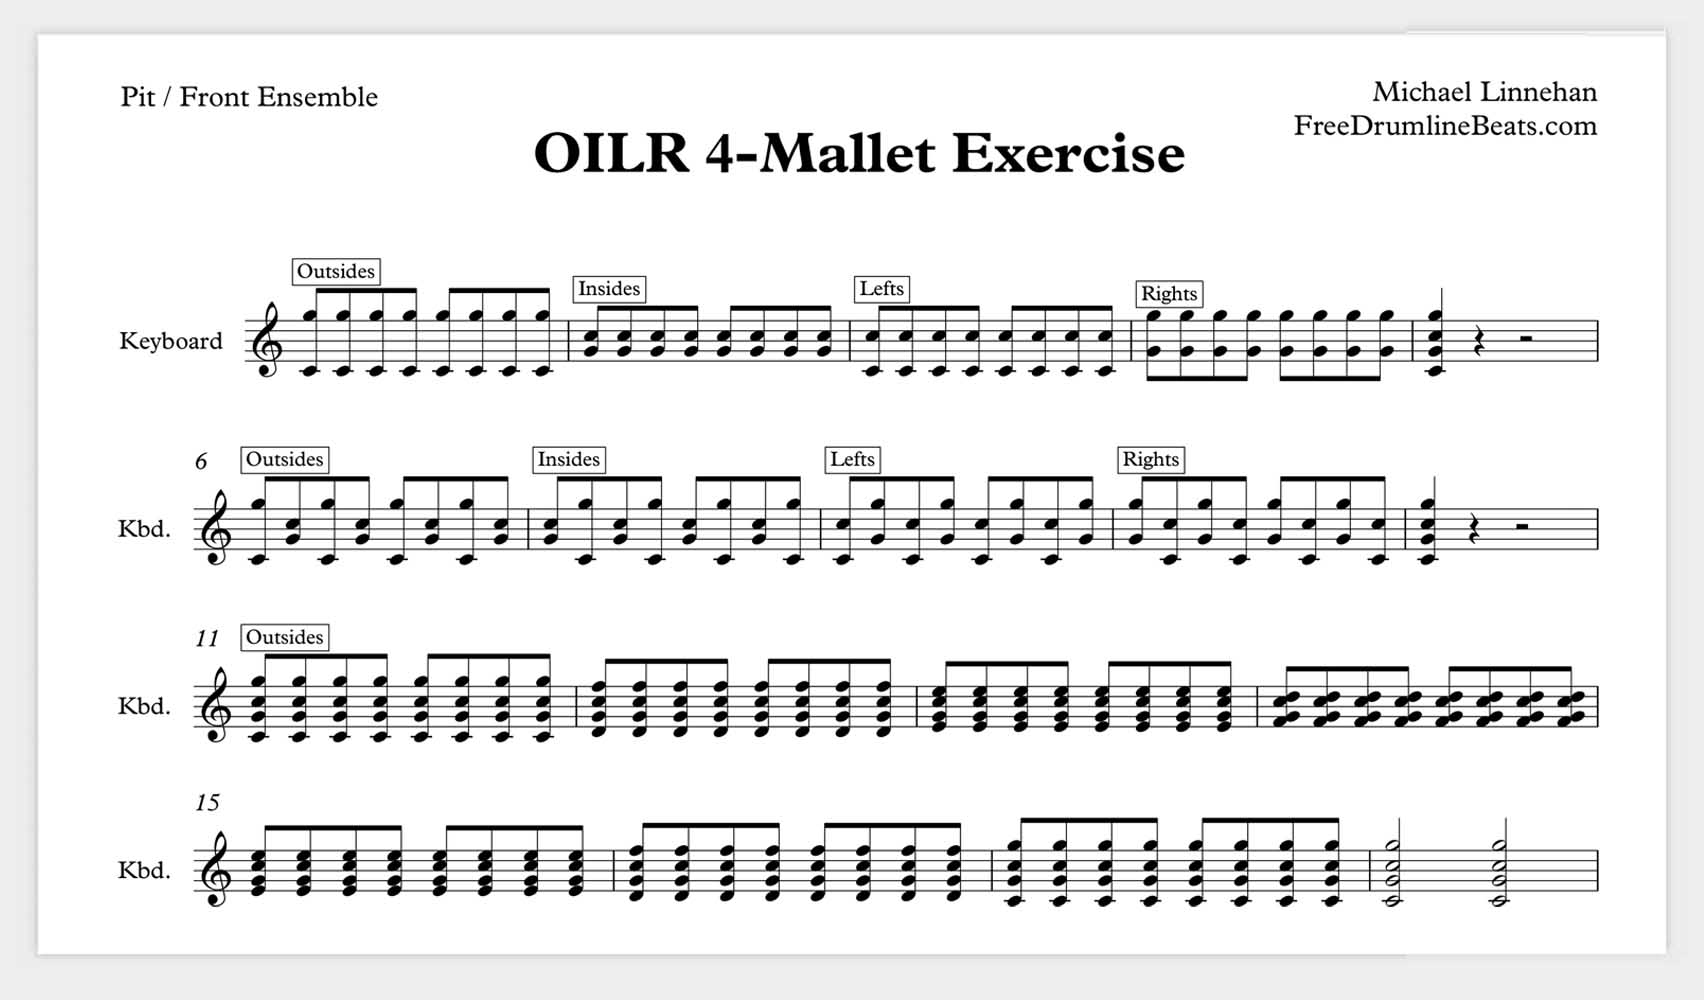 OILR - Front Ensemble 4-Mallet Keyboard Exercise.